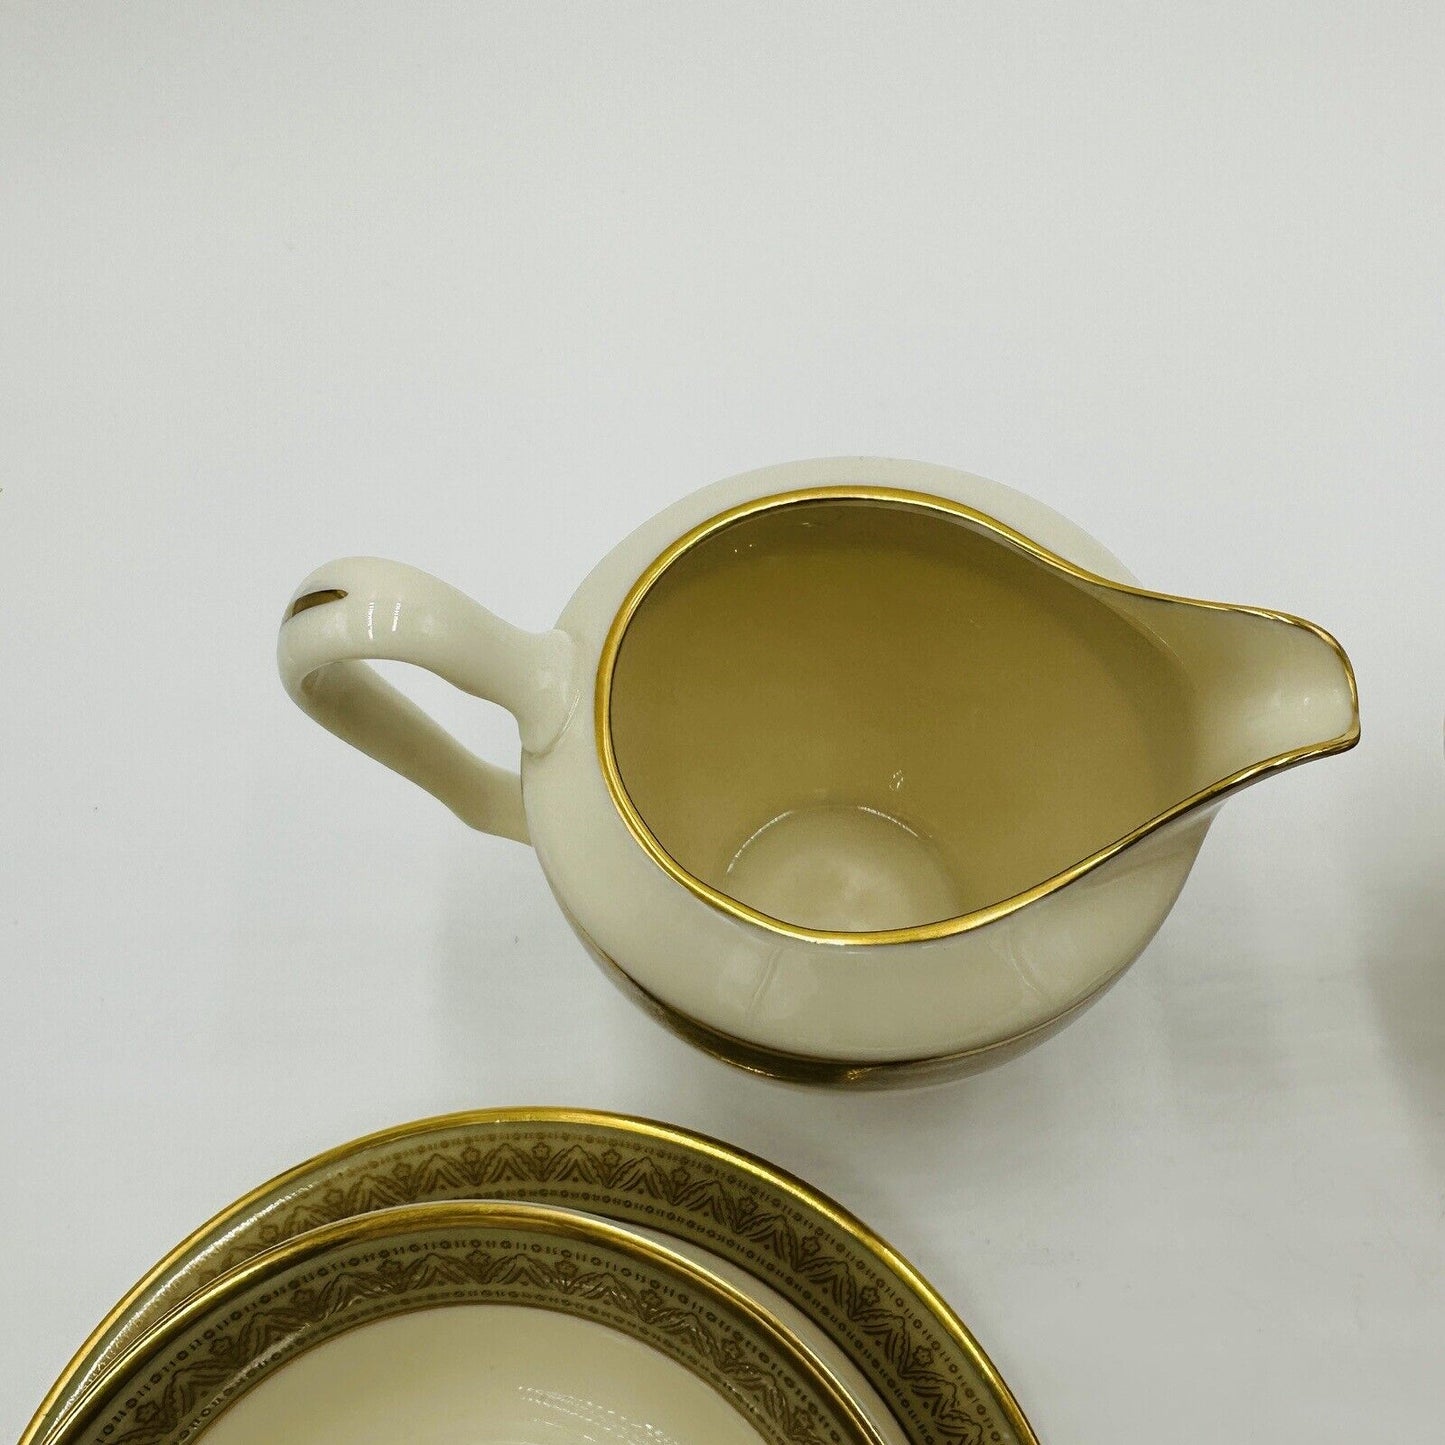 Lenox Porcelain Greenfield Cup & Saucer Creamer Sugar Bowl Lot 8 Pieces